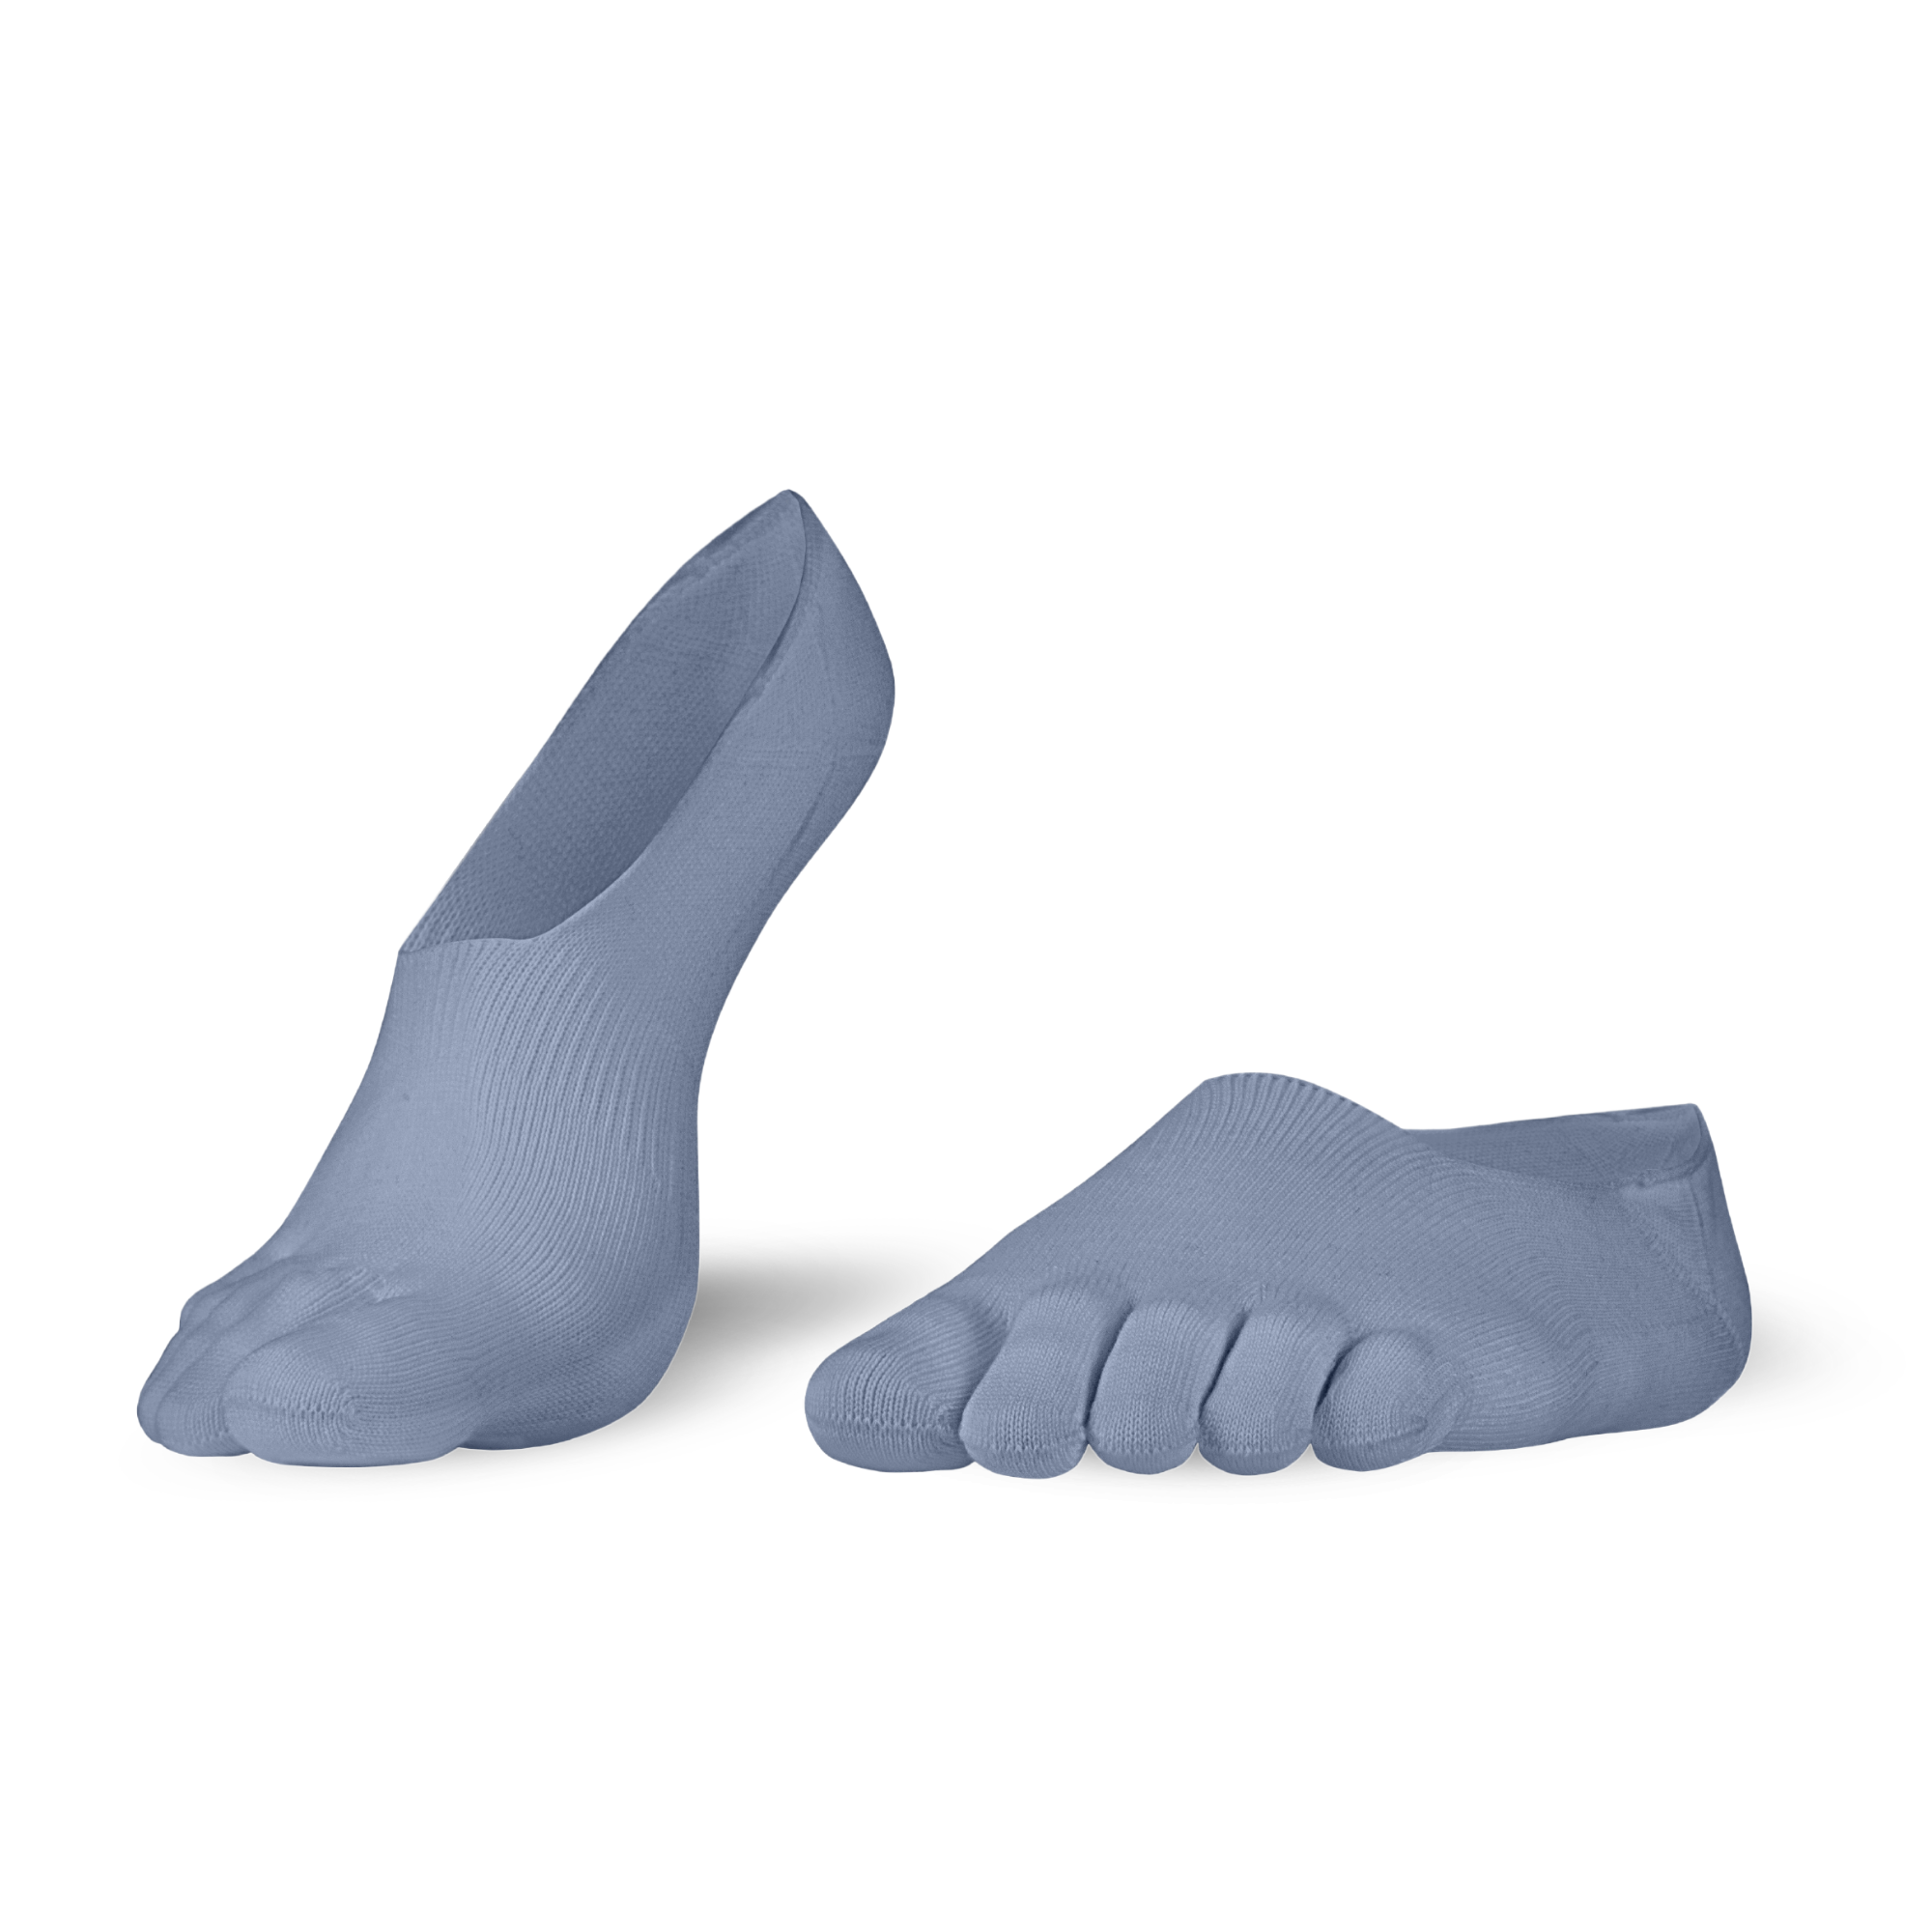 Toe socks Knitido Essentials No Show toe socks in blue grey 